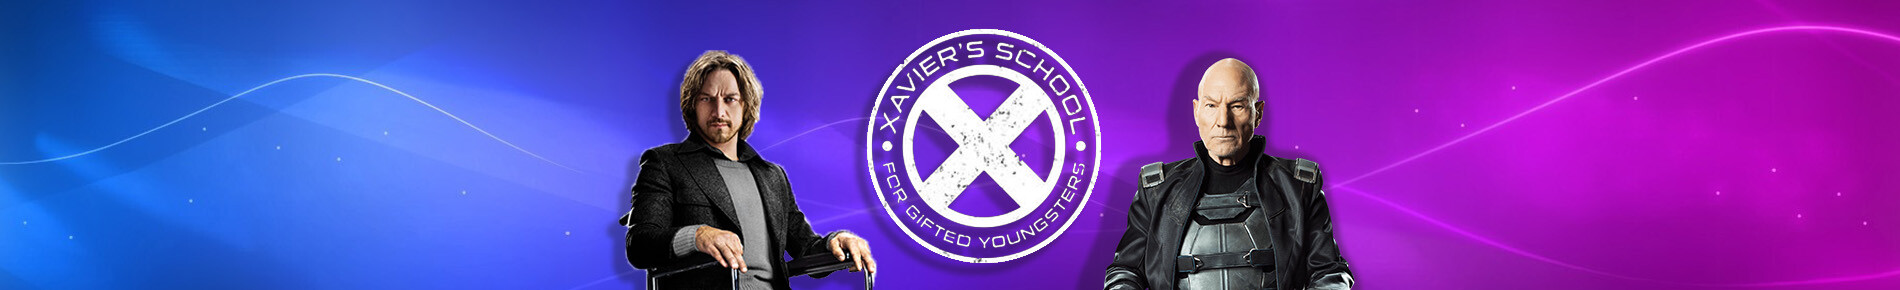 Professeur Charles Xavier